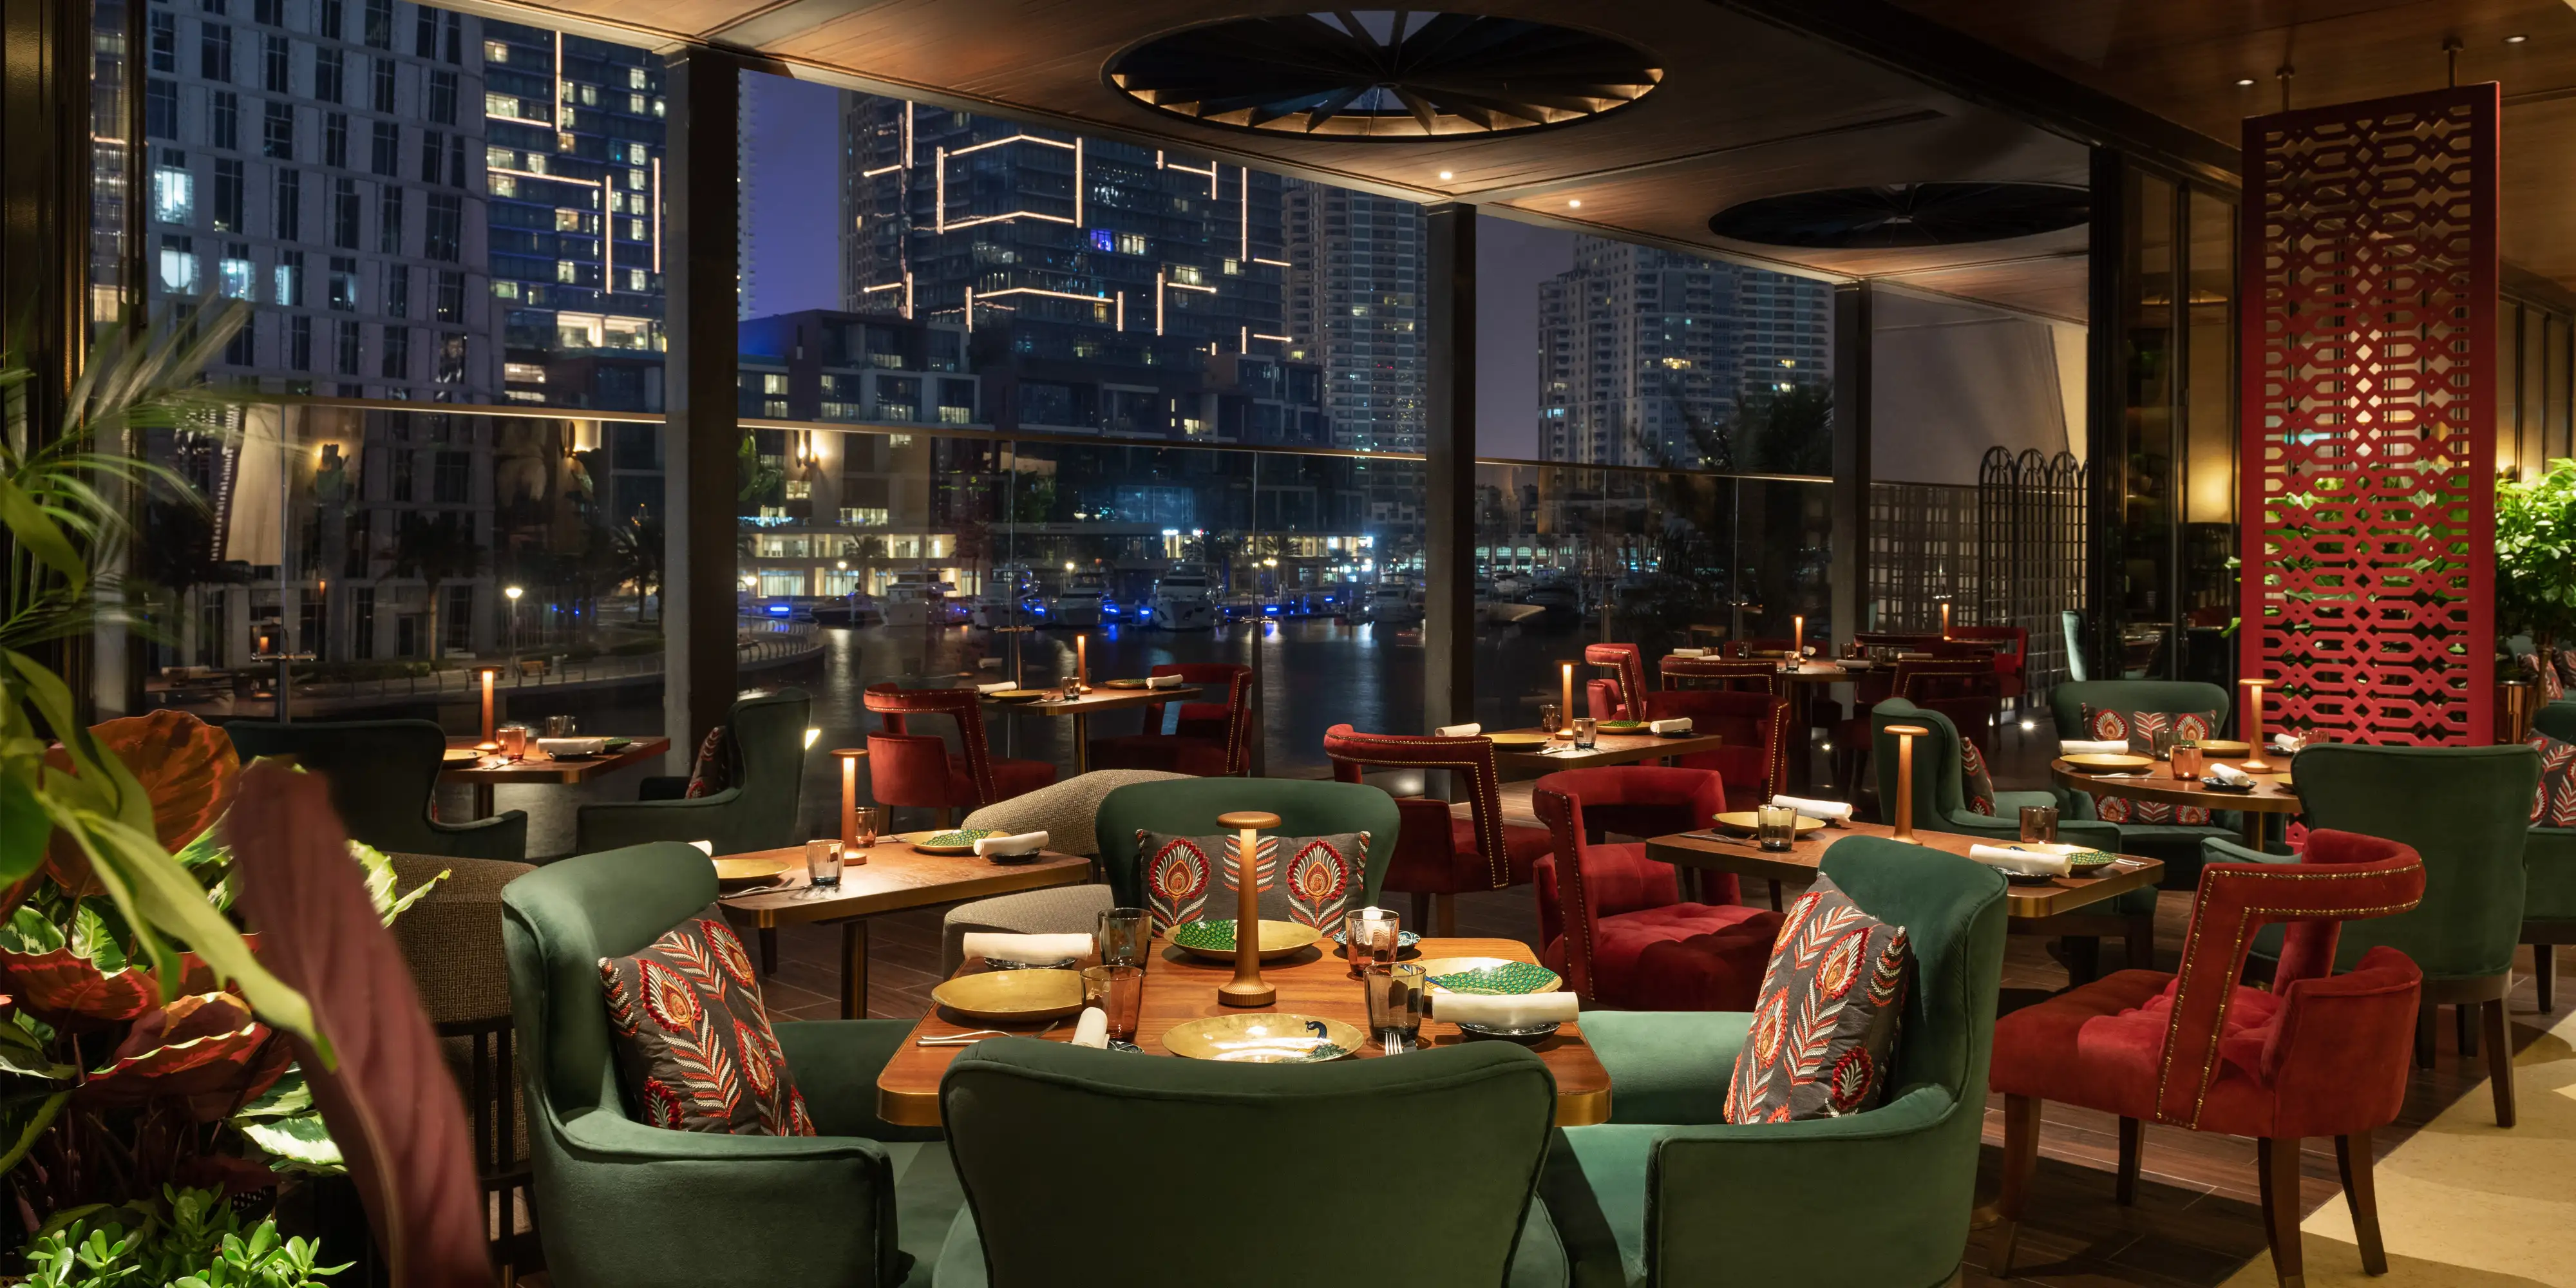 The Best Restaraunts for Date in Dubai